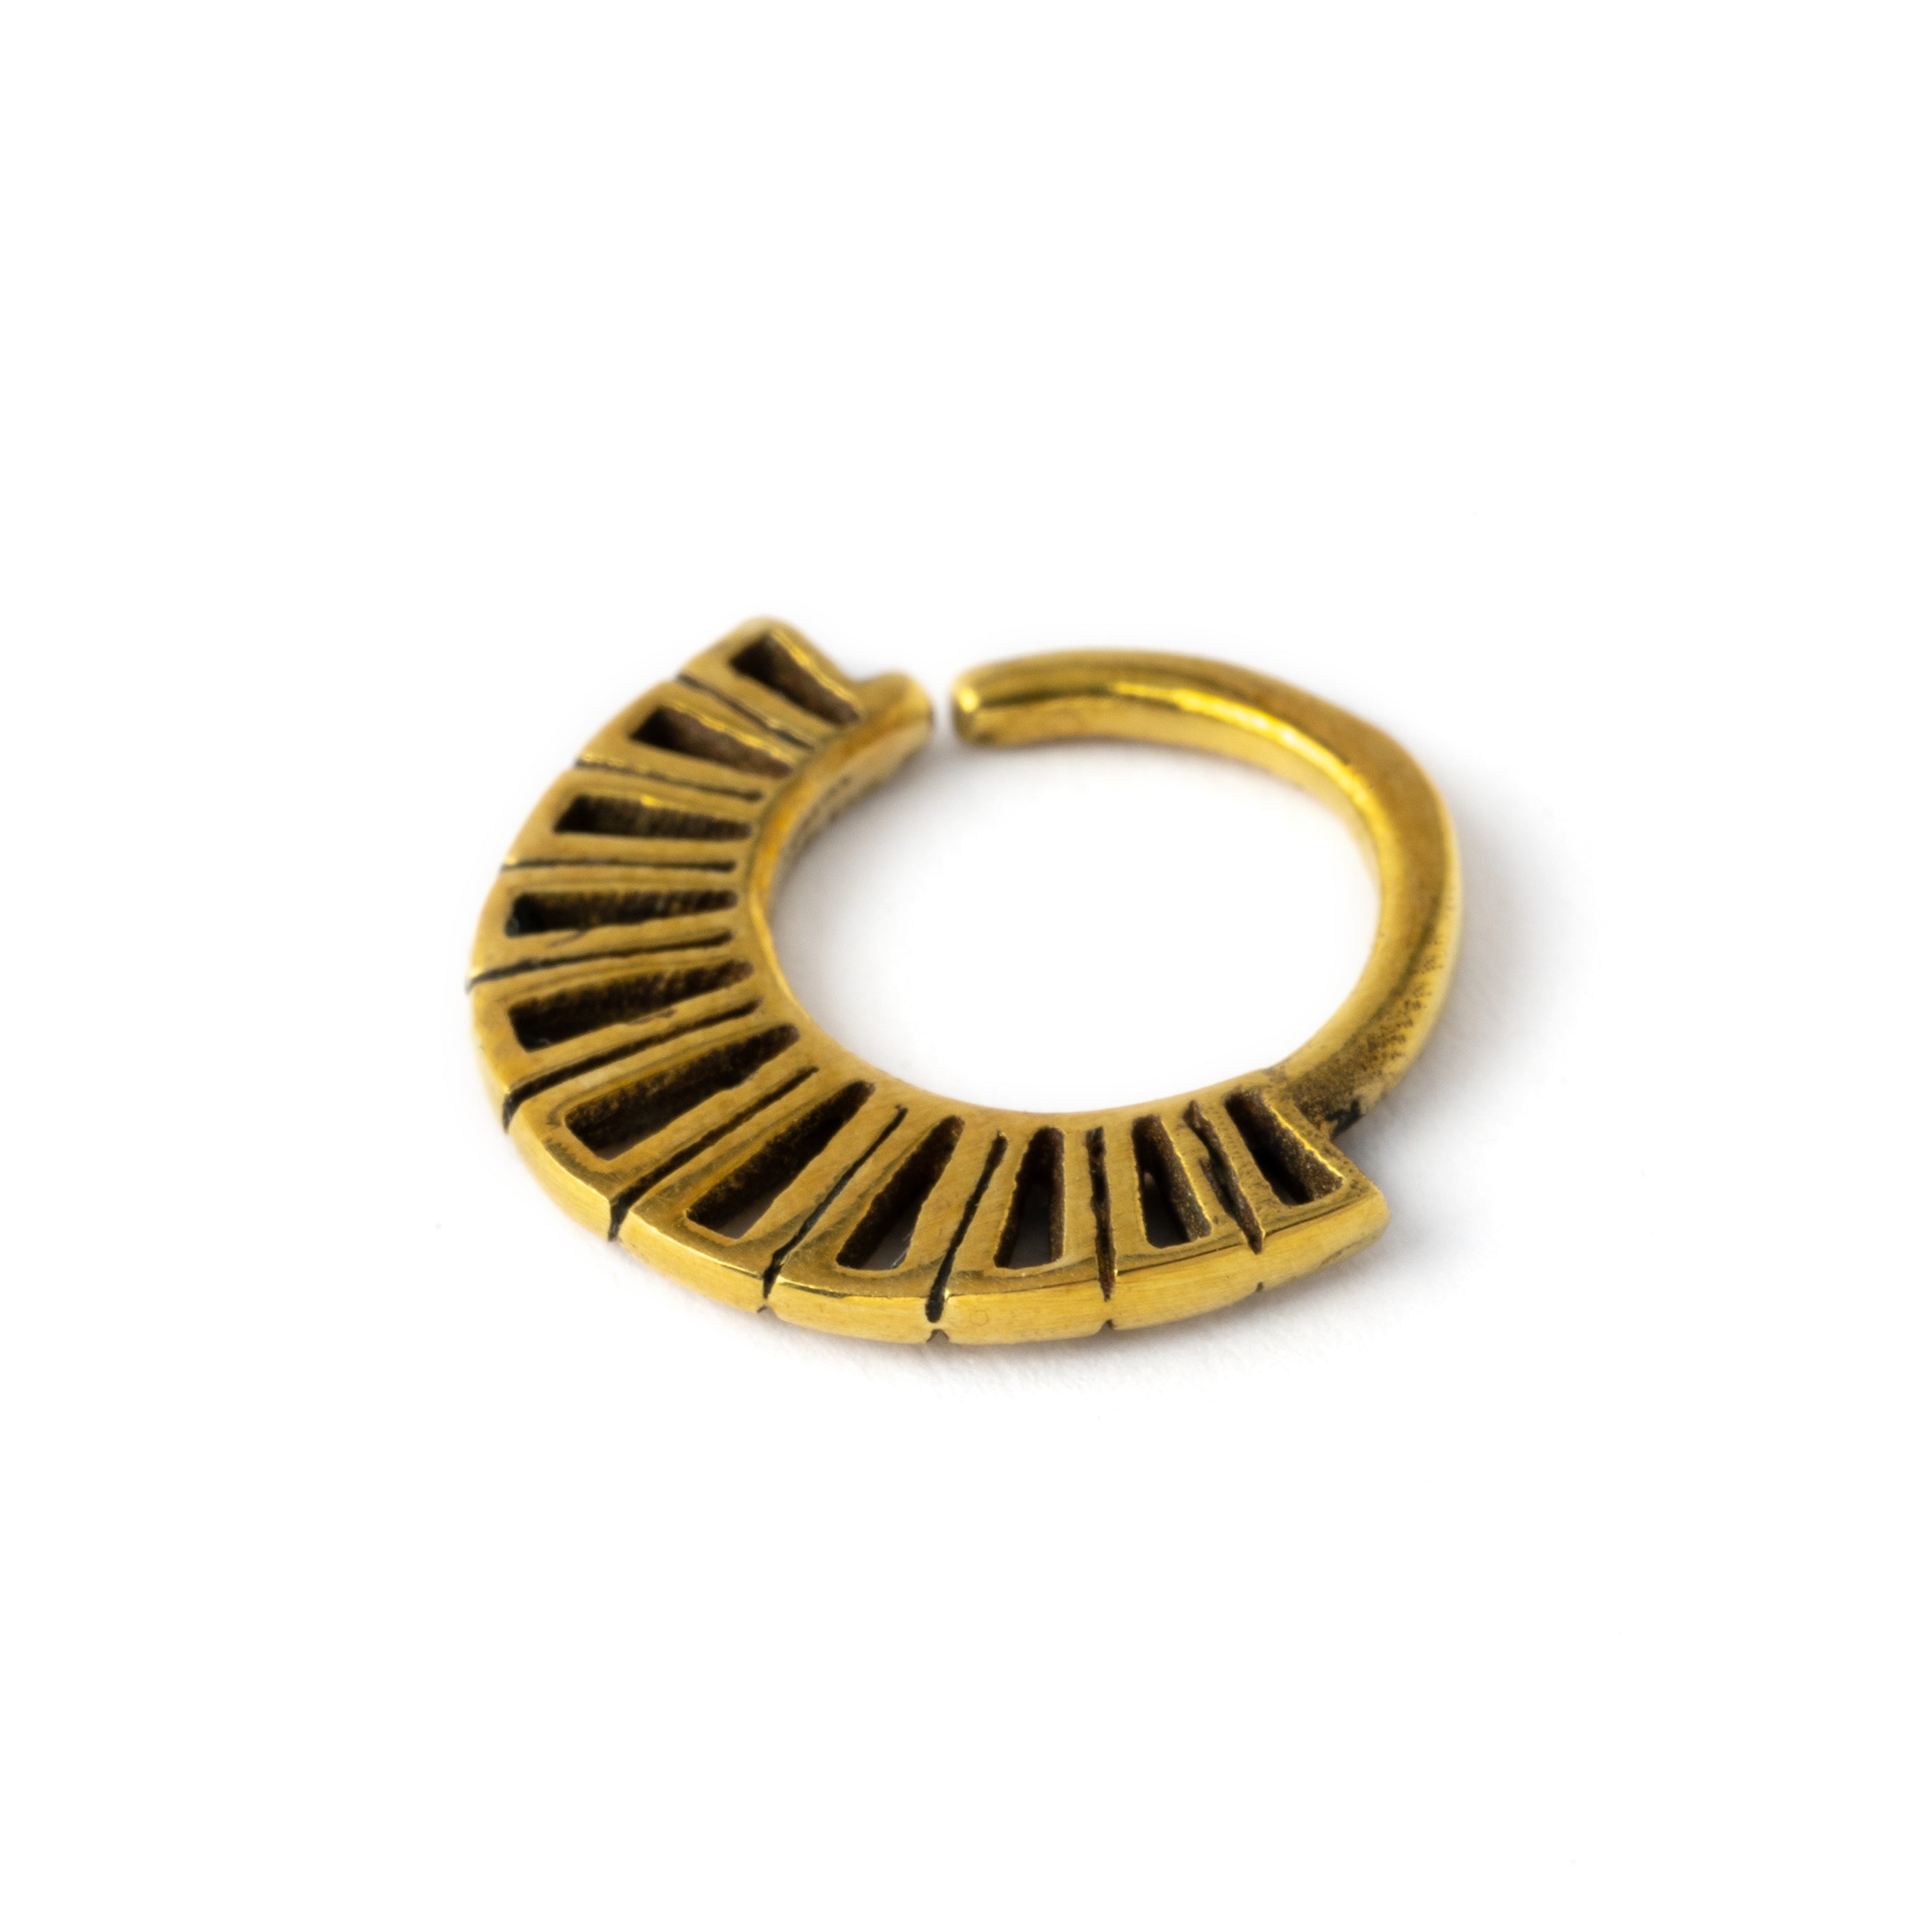 Aditi 18g (1mm) brass tribal geometric septum piercing ring left side view